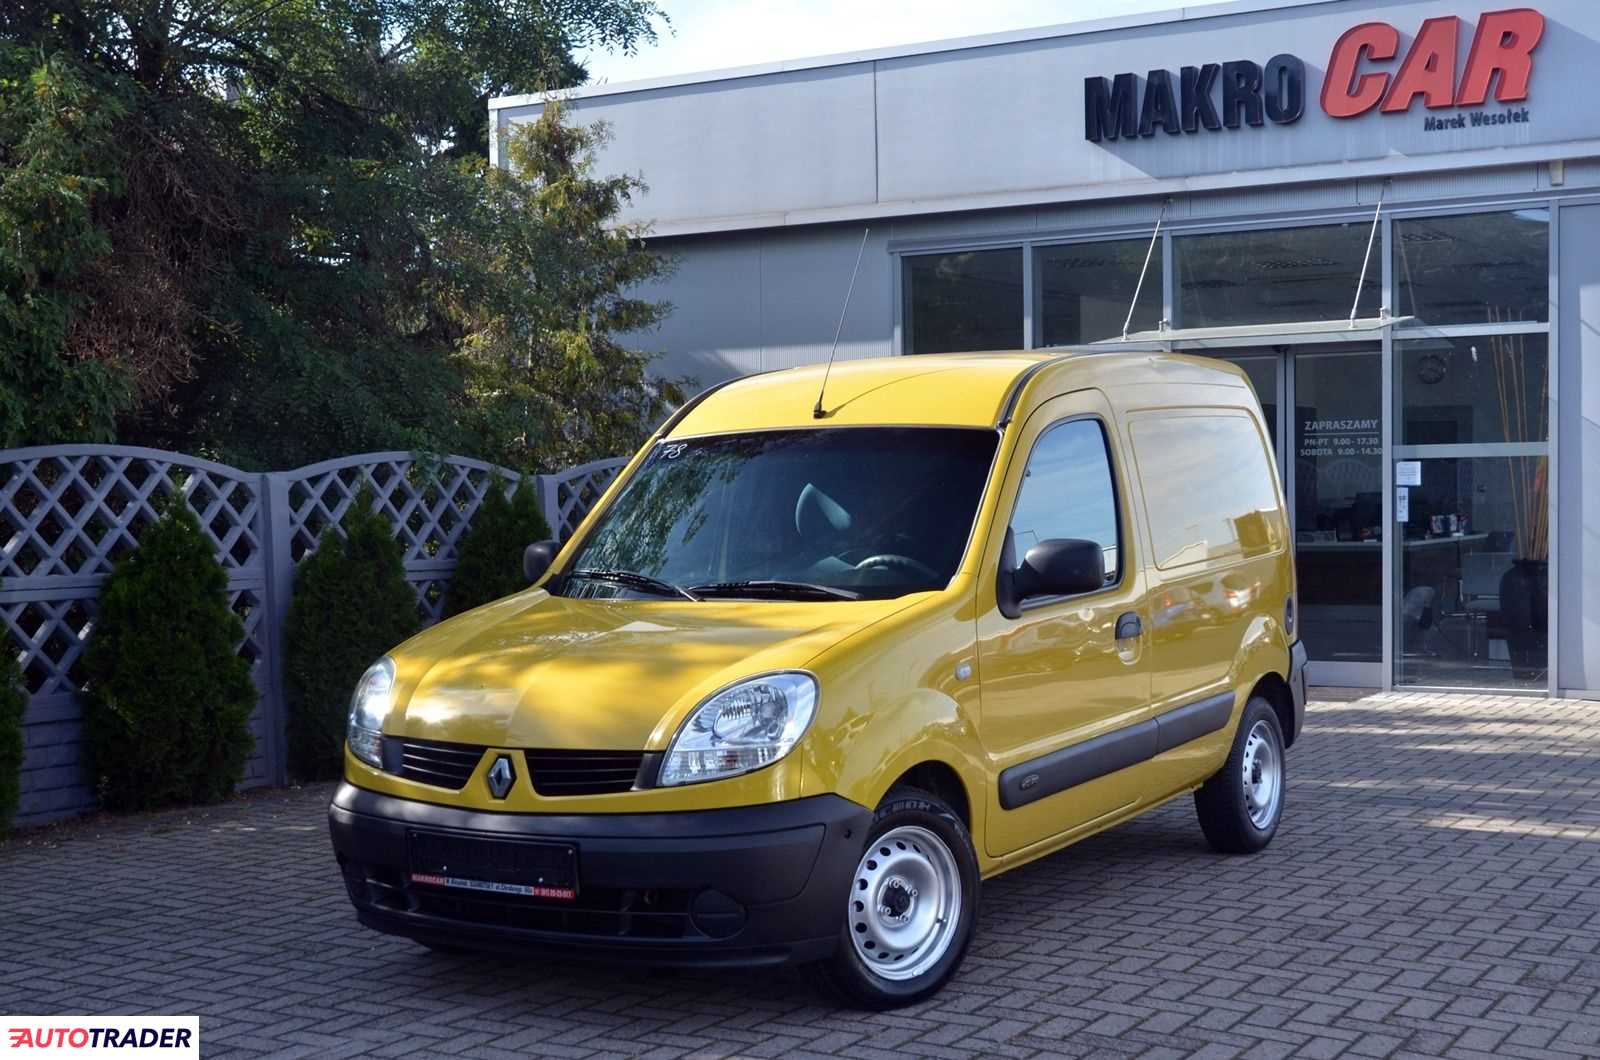 Renault Kangoo 2008 1.5